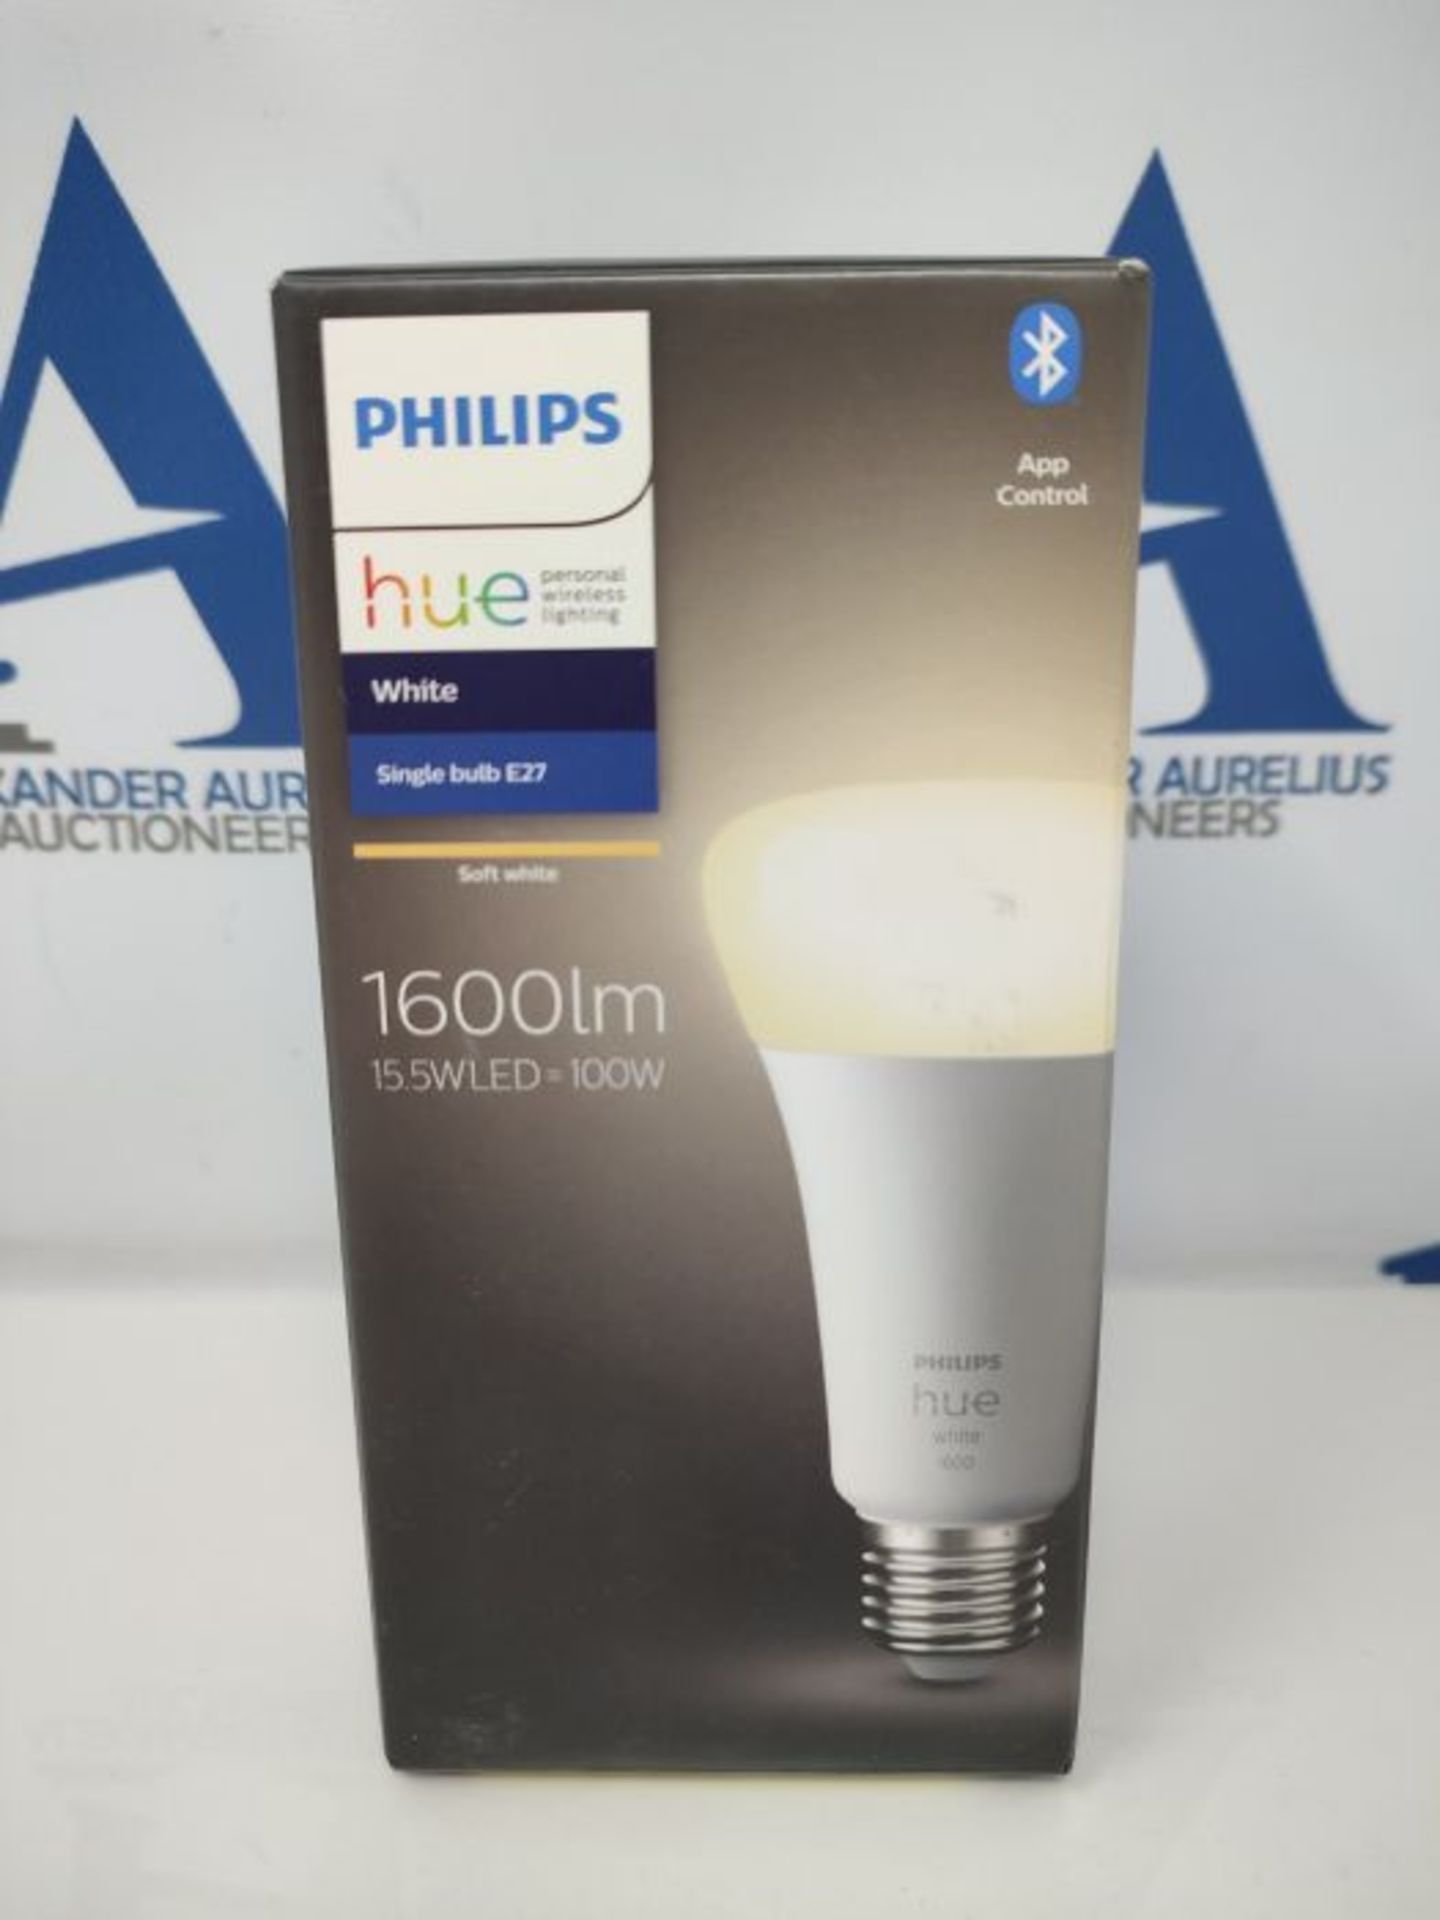 Philips Hue White E27 LED Einzelpack, hoher Lichtouput (1600lm), warmweiÃxes Licht, - Image 2 of 3